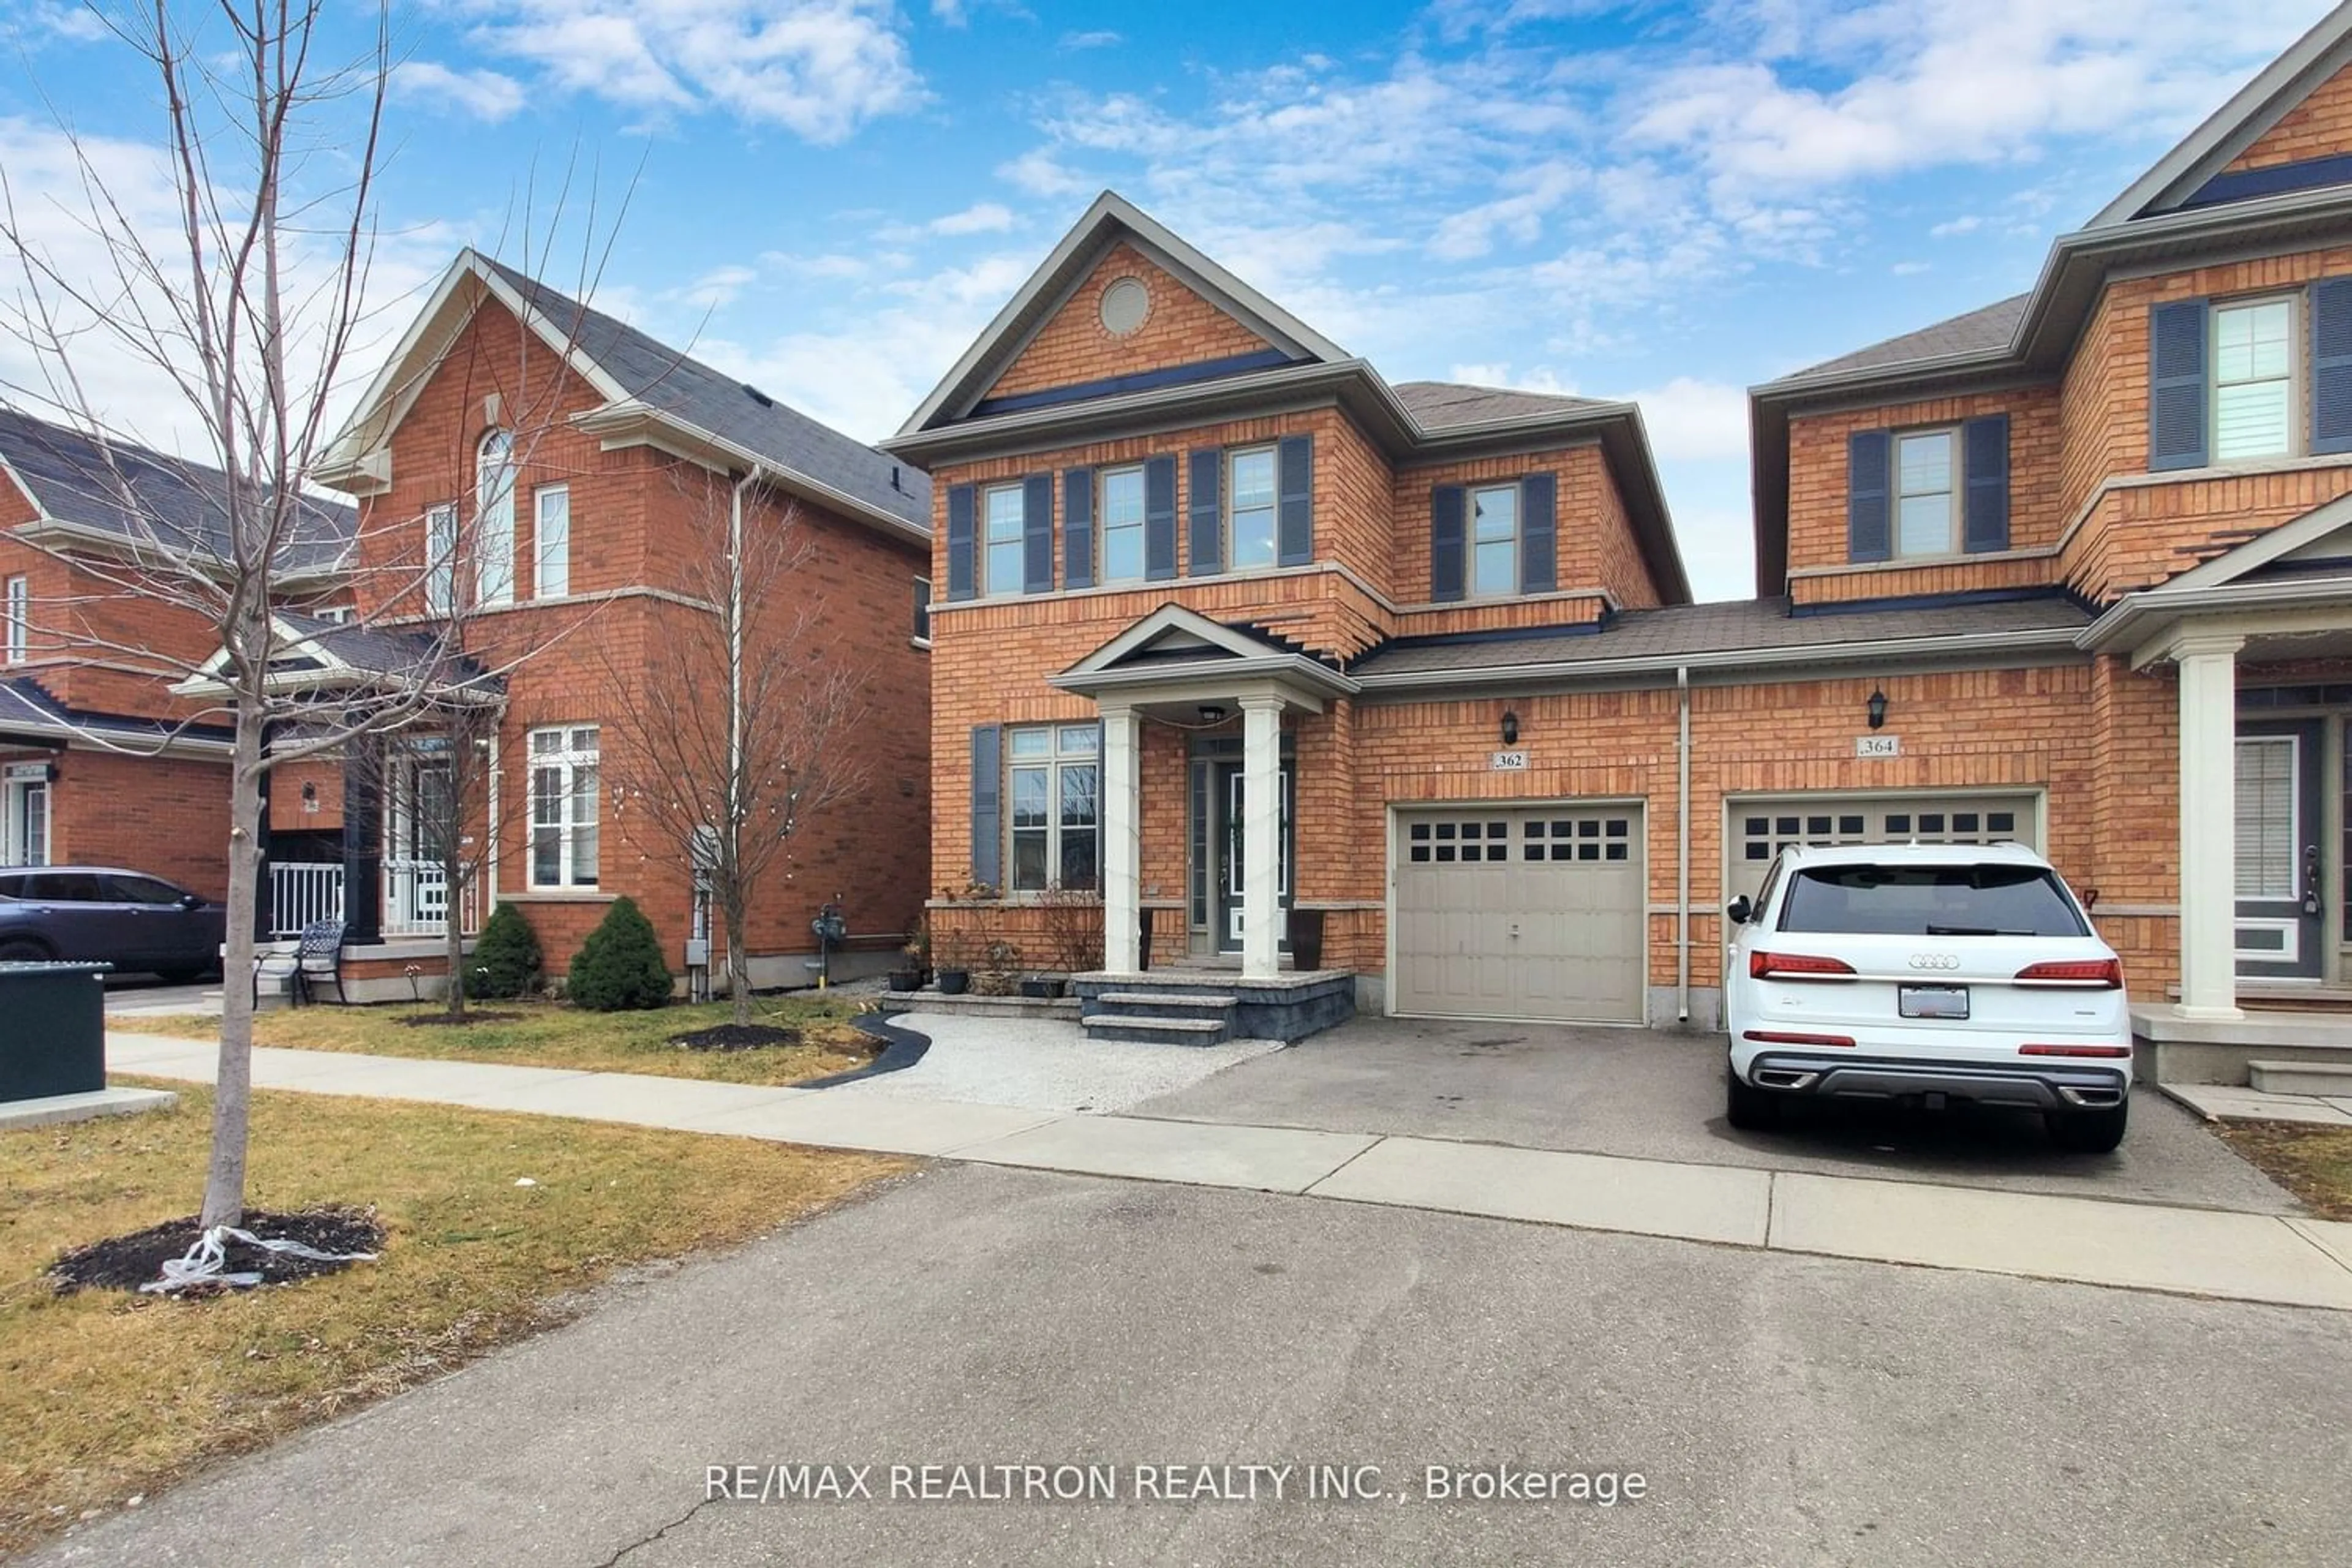 Home with brick exterior material for 362 Landsborough Ave, Milton Ontario L9T 7Y7